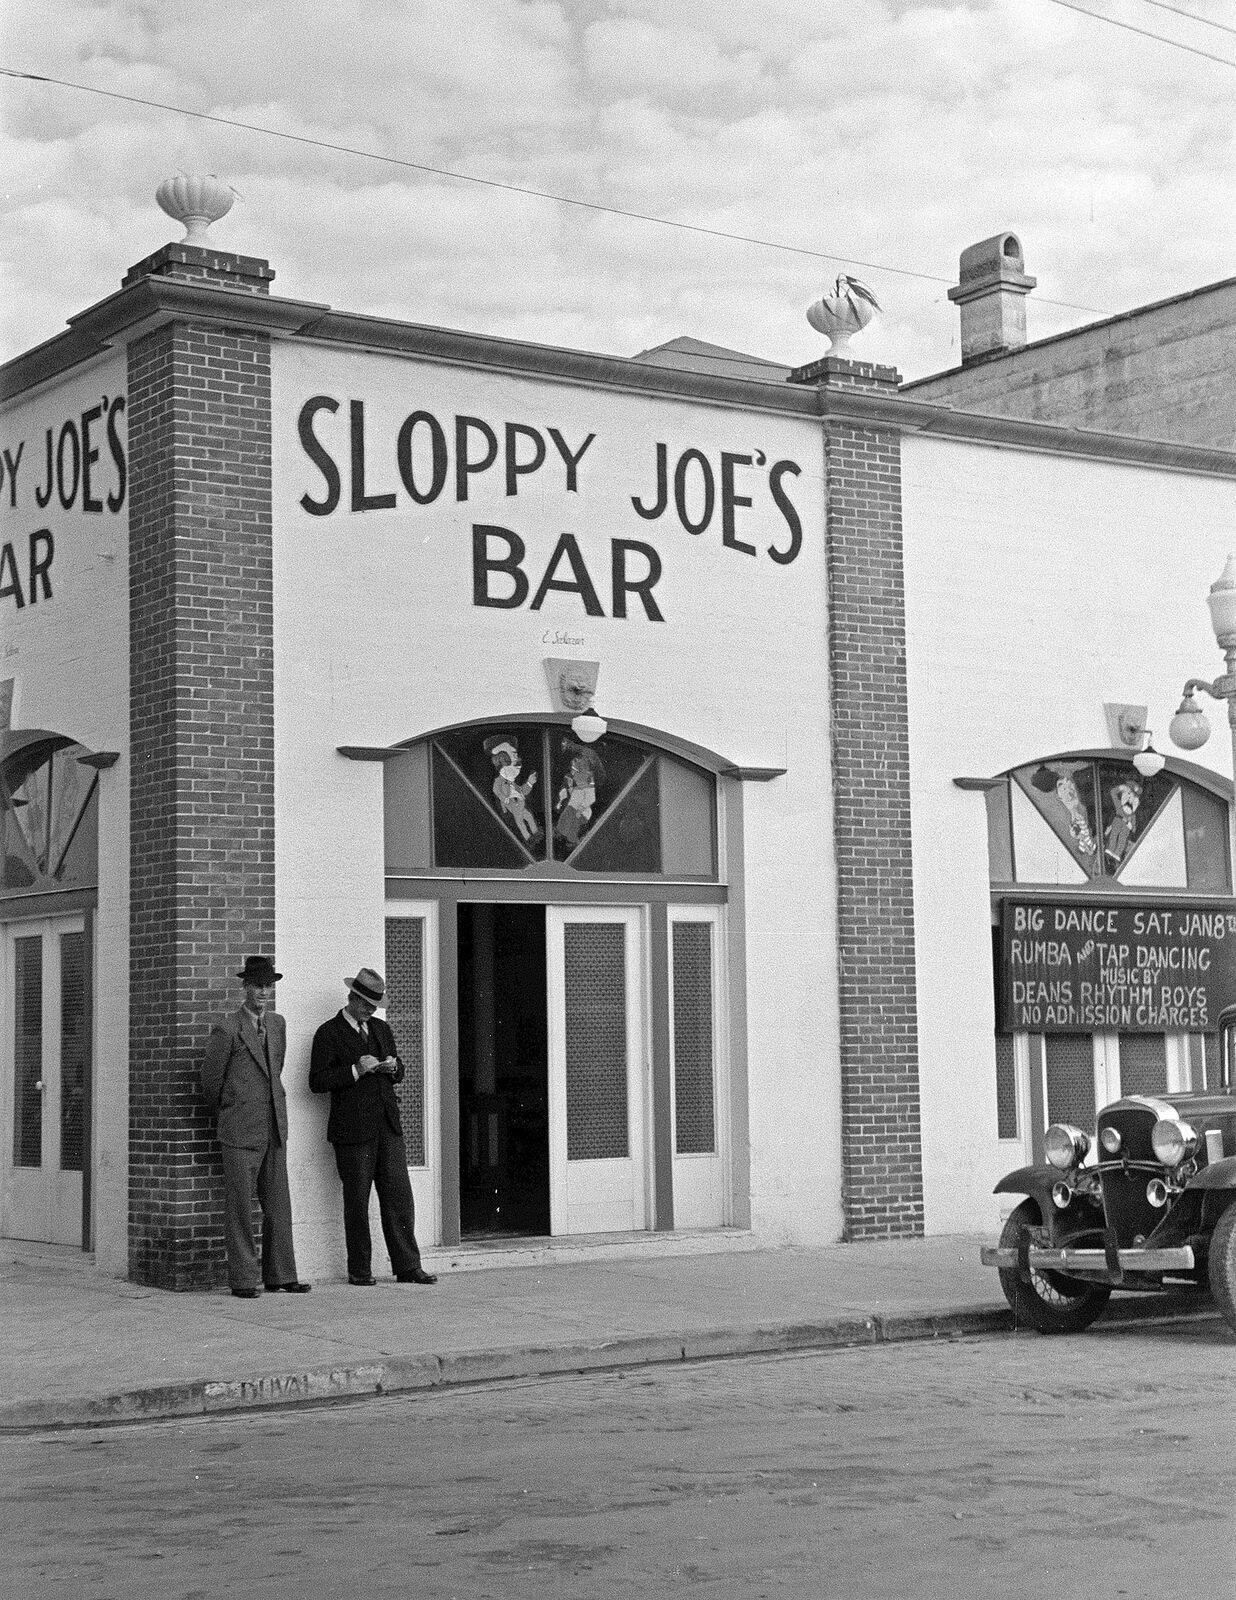 1938 Sloppy Joe's Bar Key West Florida Vi Old Vintage Photo 8.5